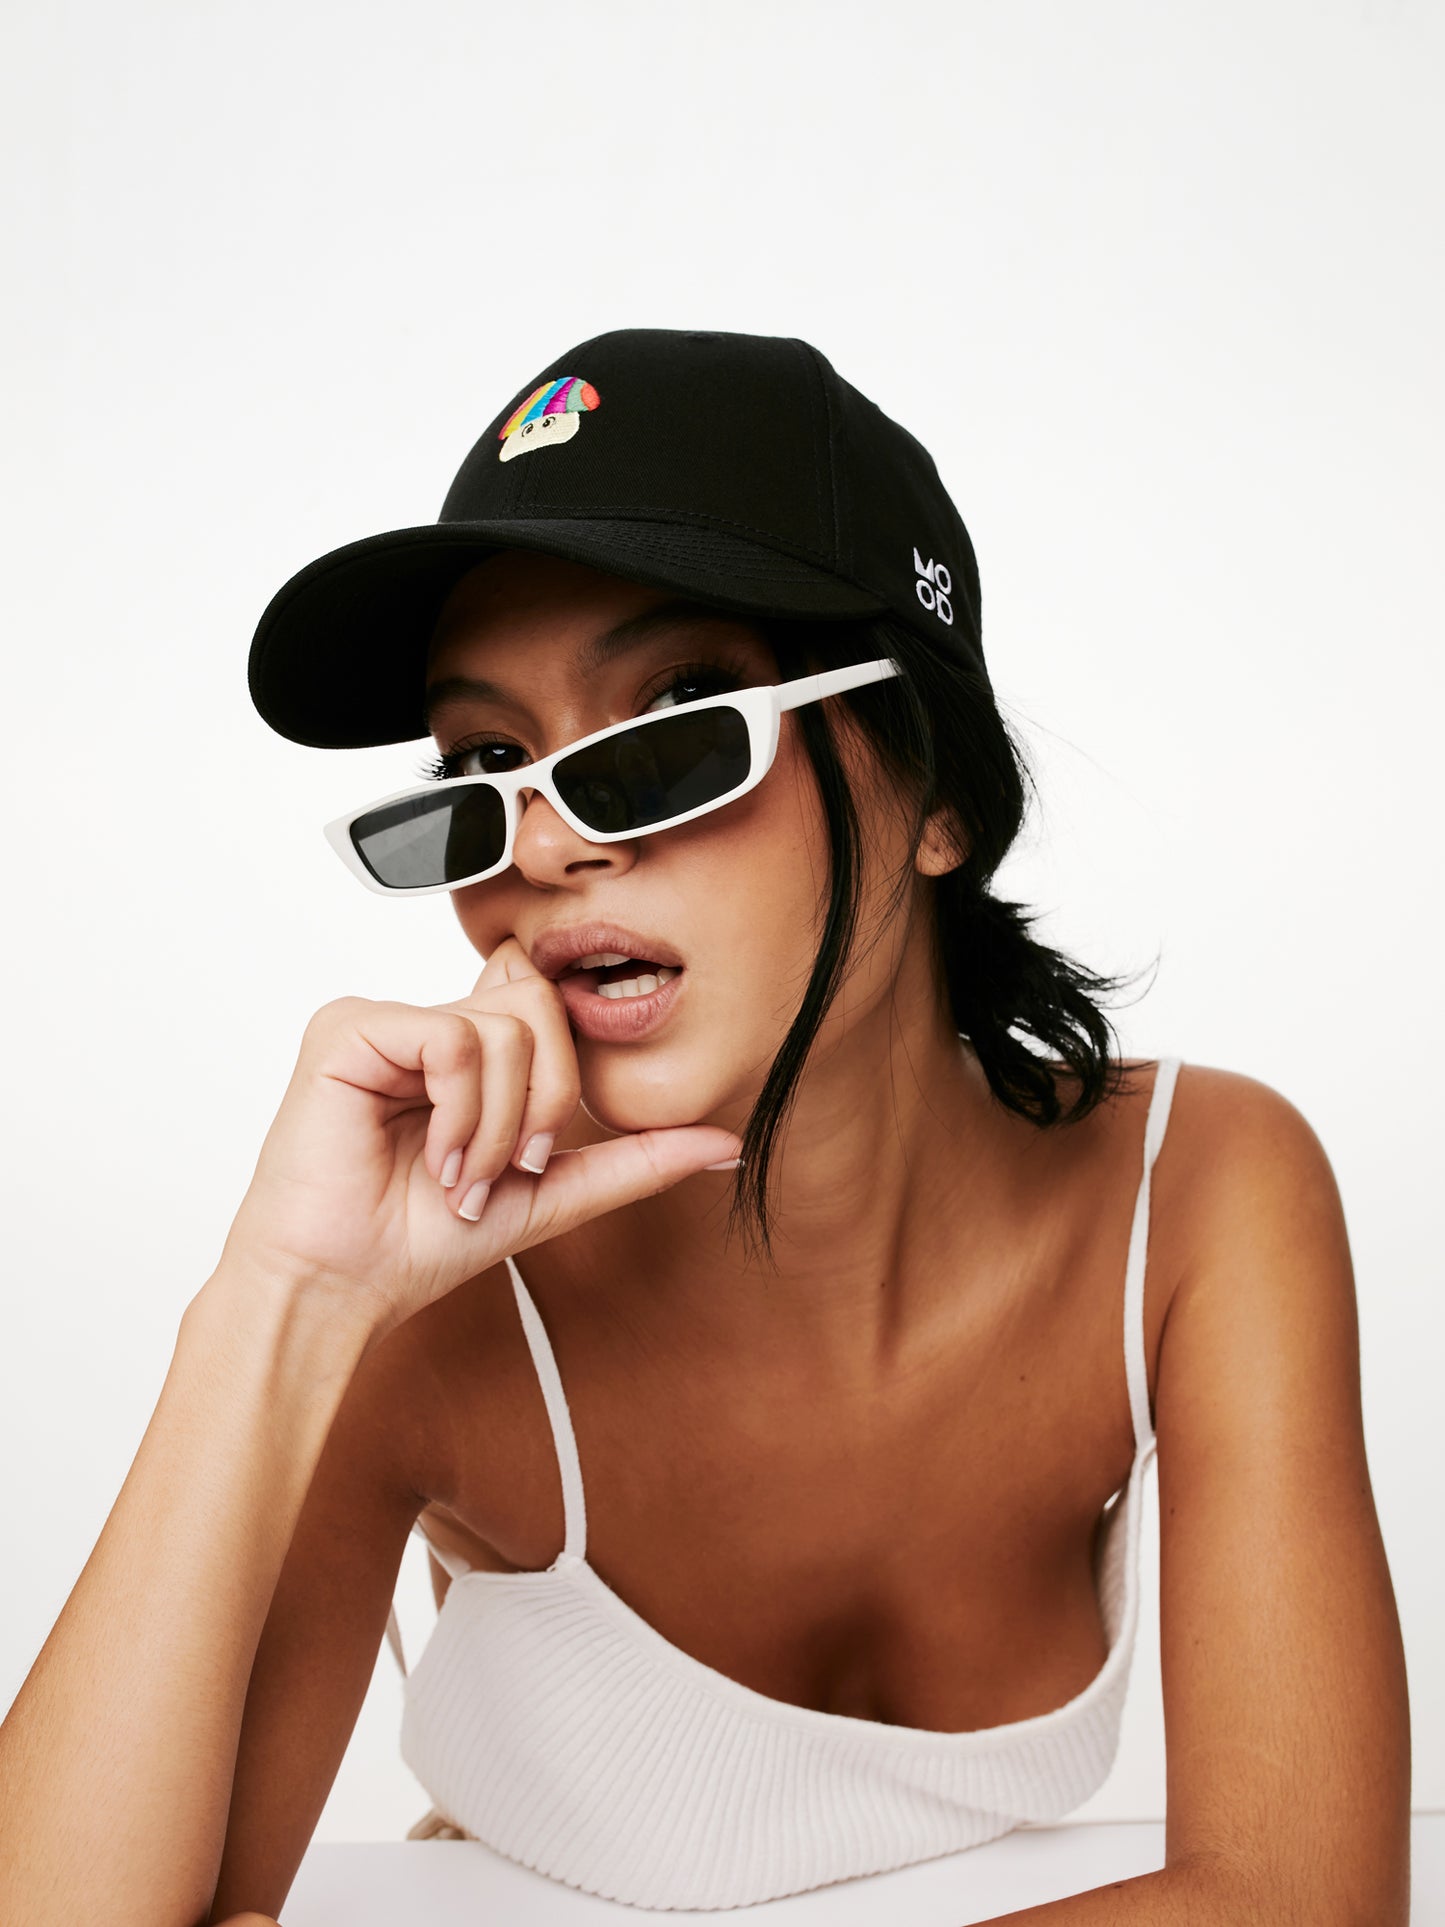 MOOD female model wearing Shroom baseball cap in black color product shoot